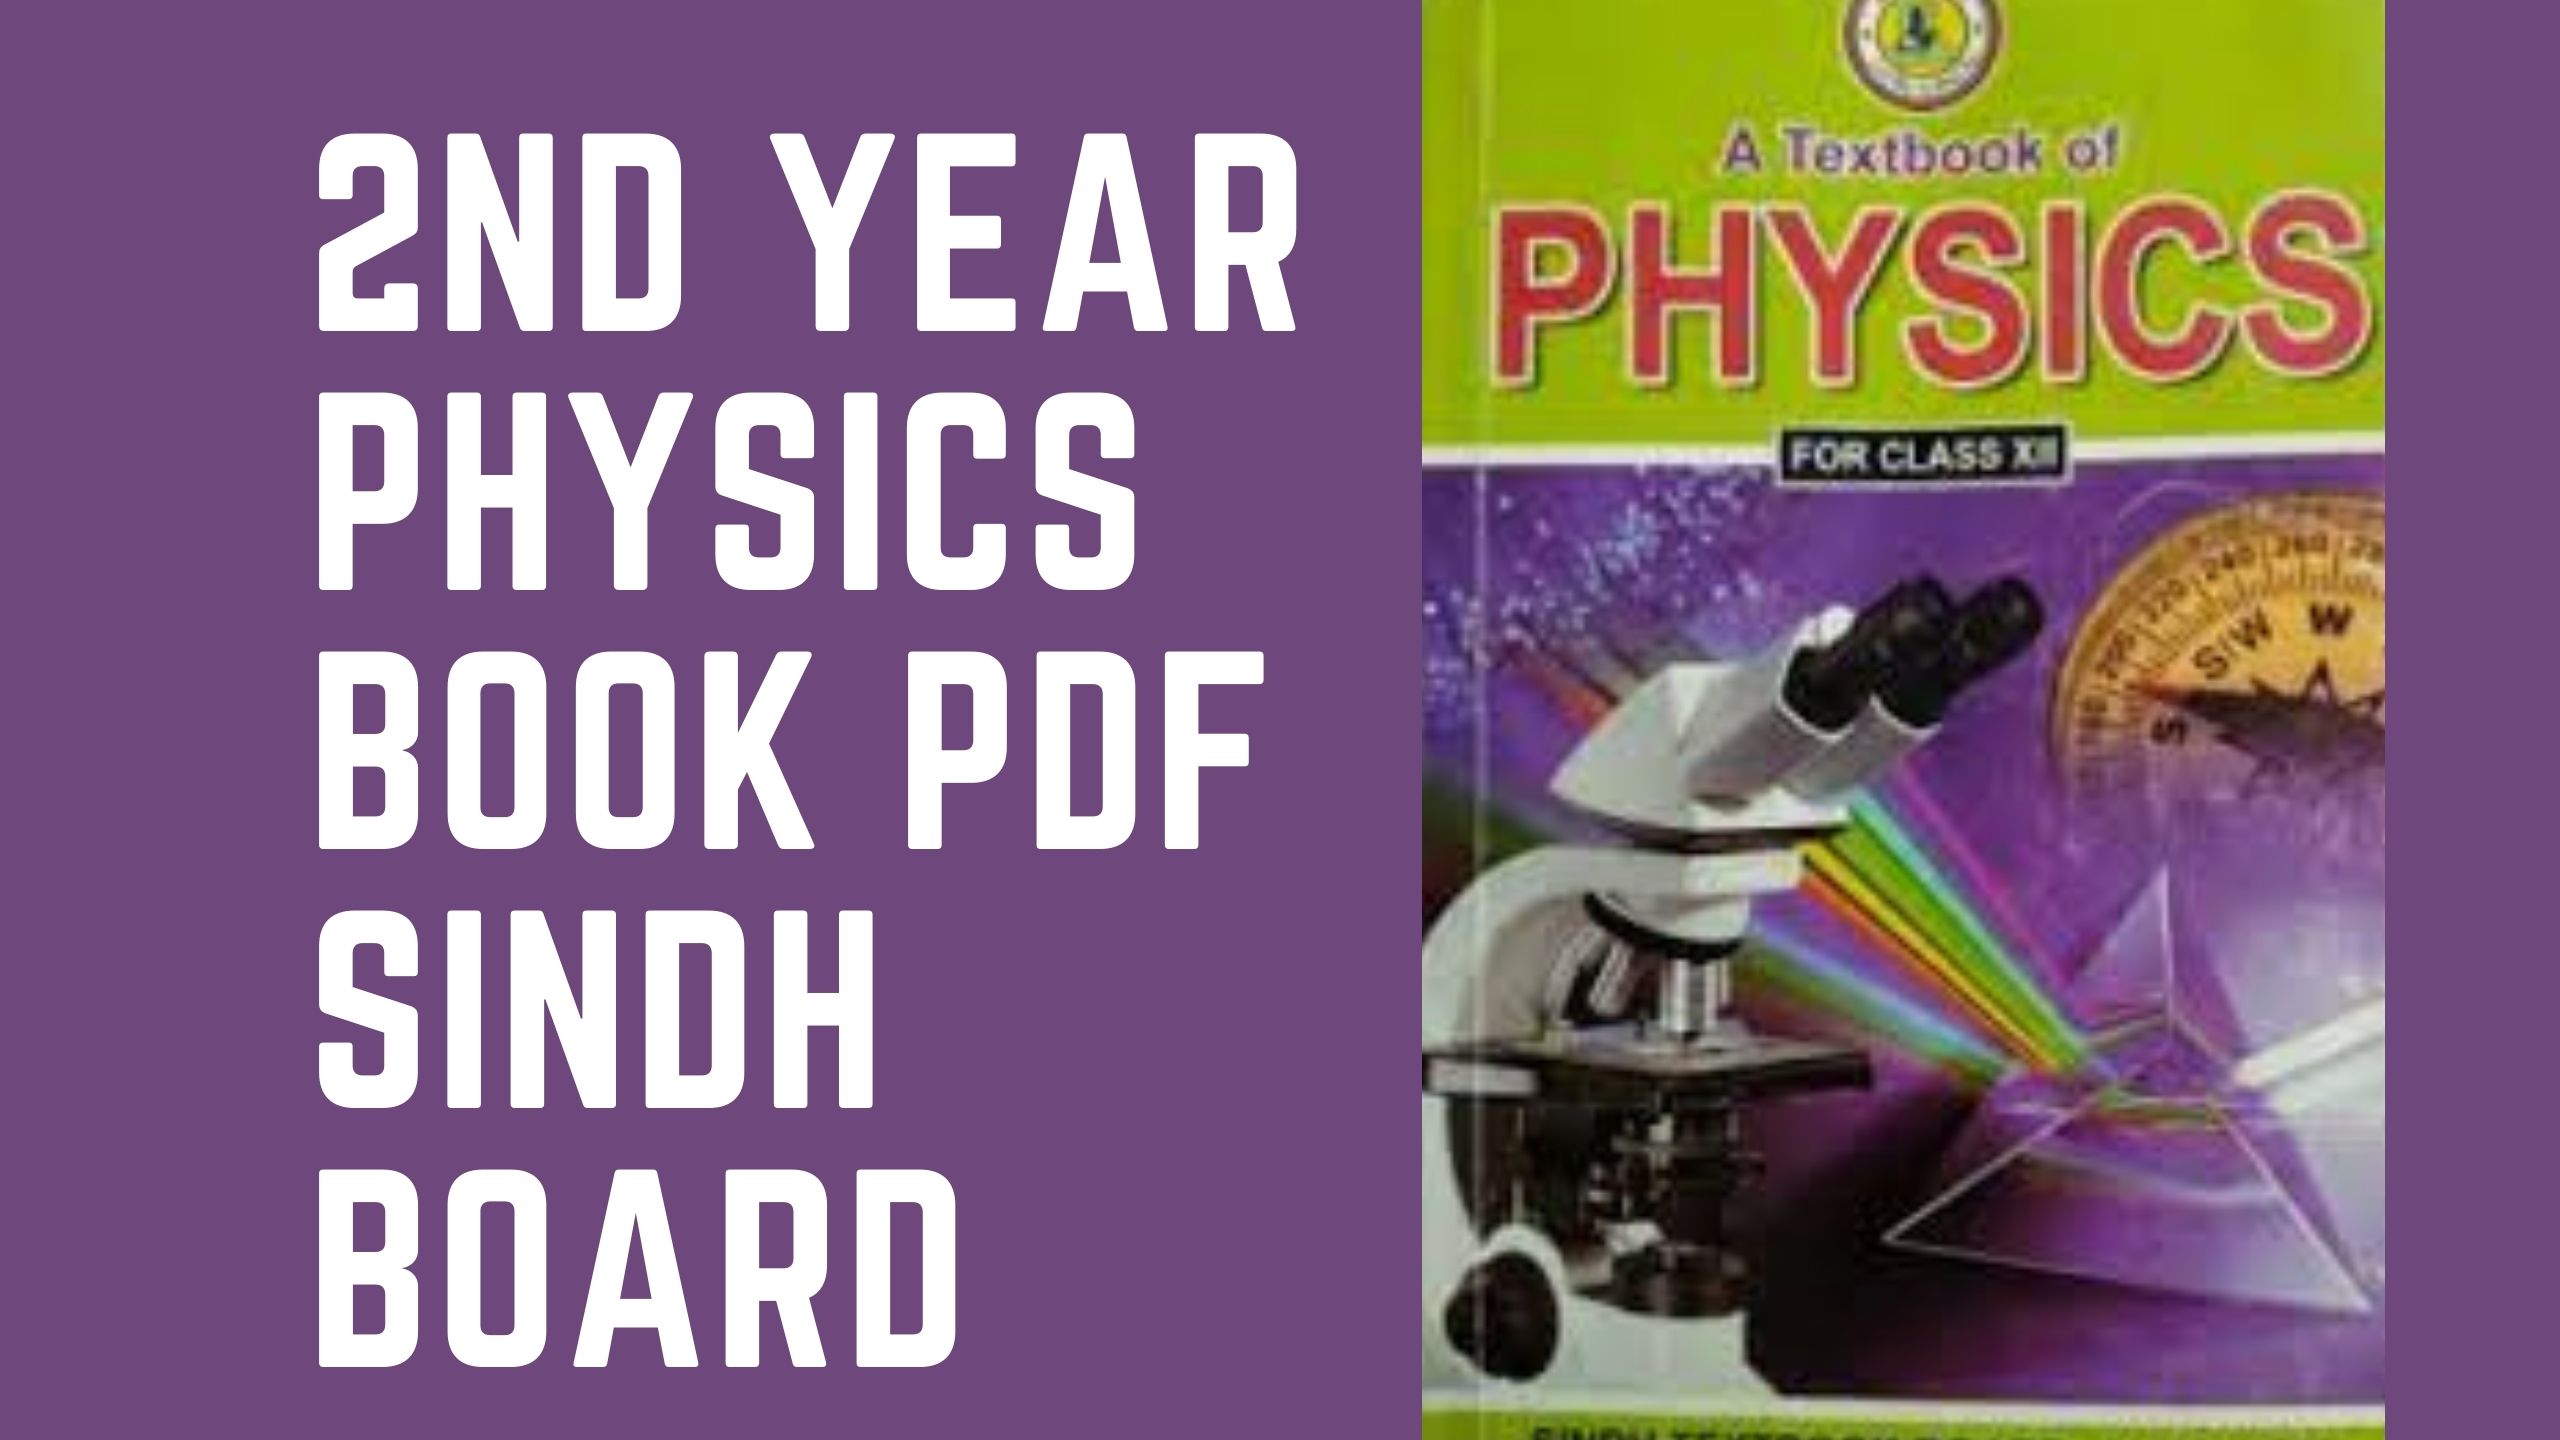 2nd Year Physics Book Pdf Sindh Board